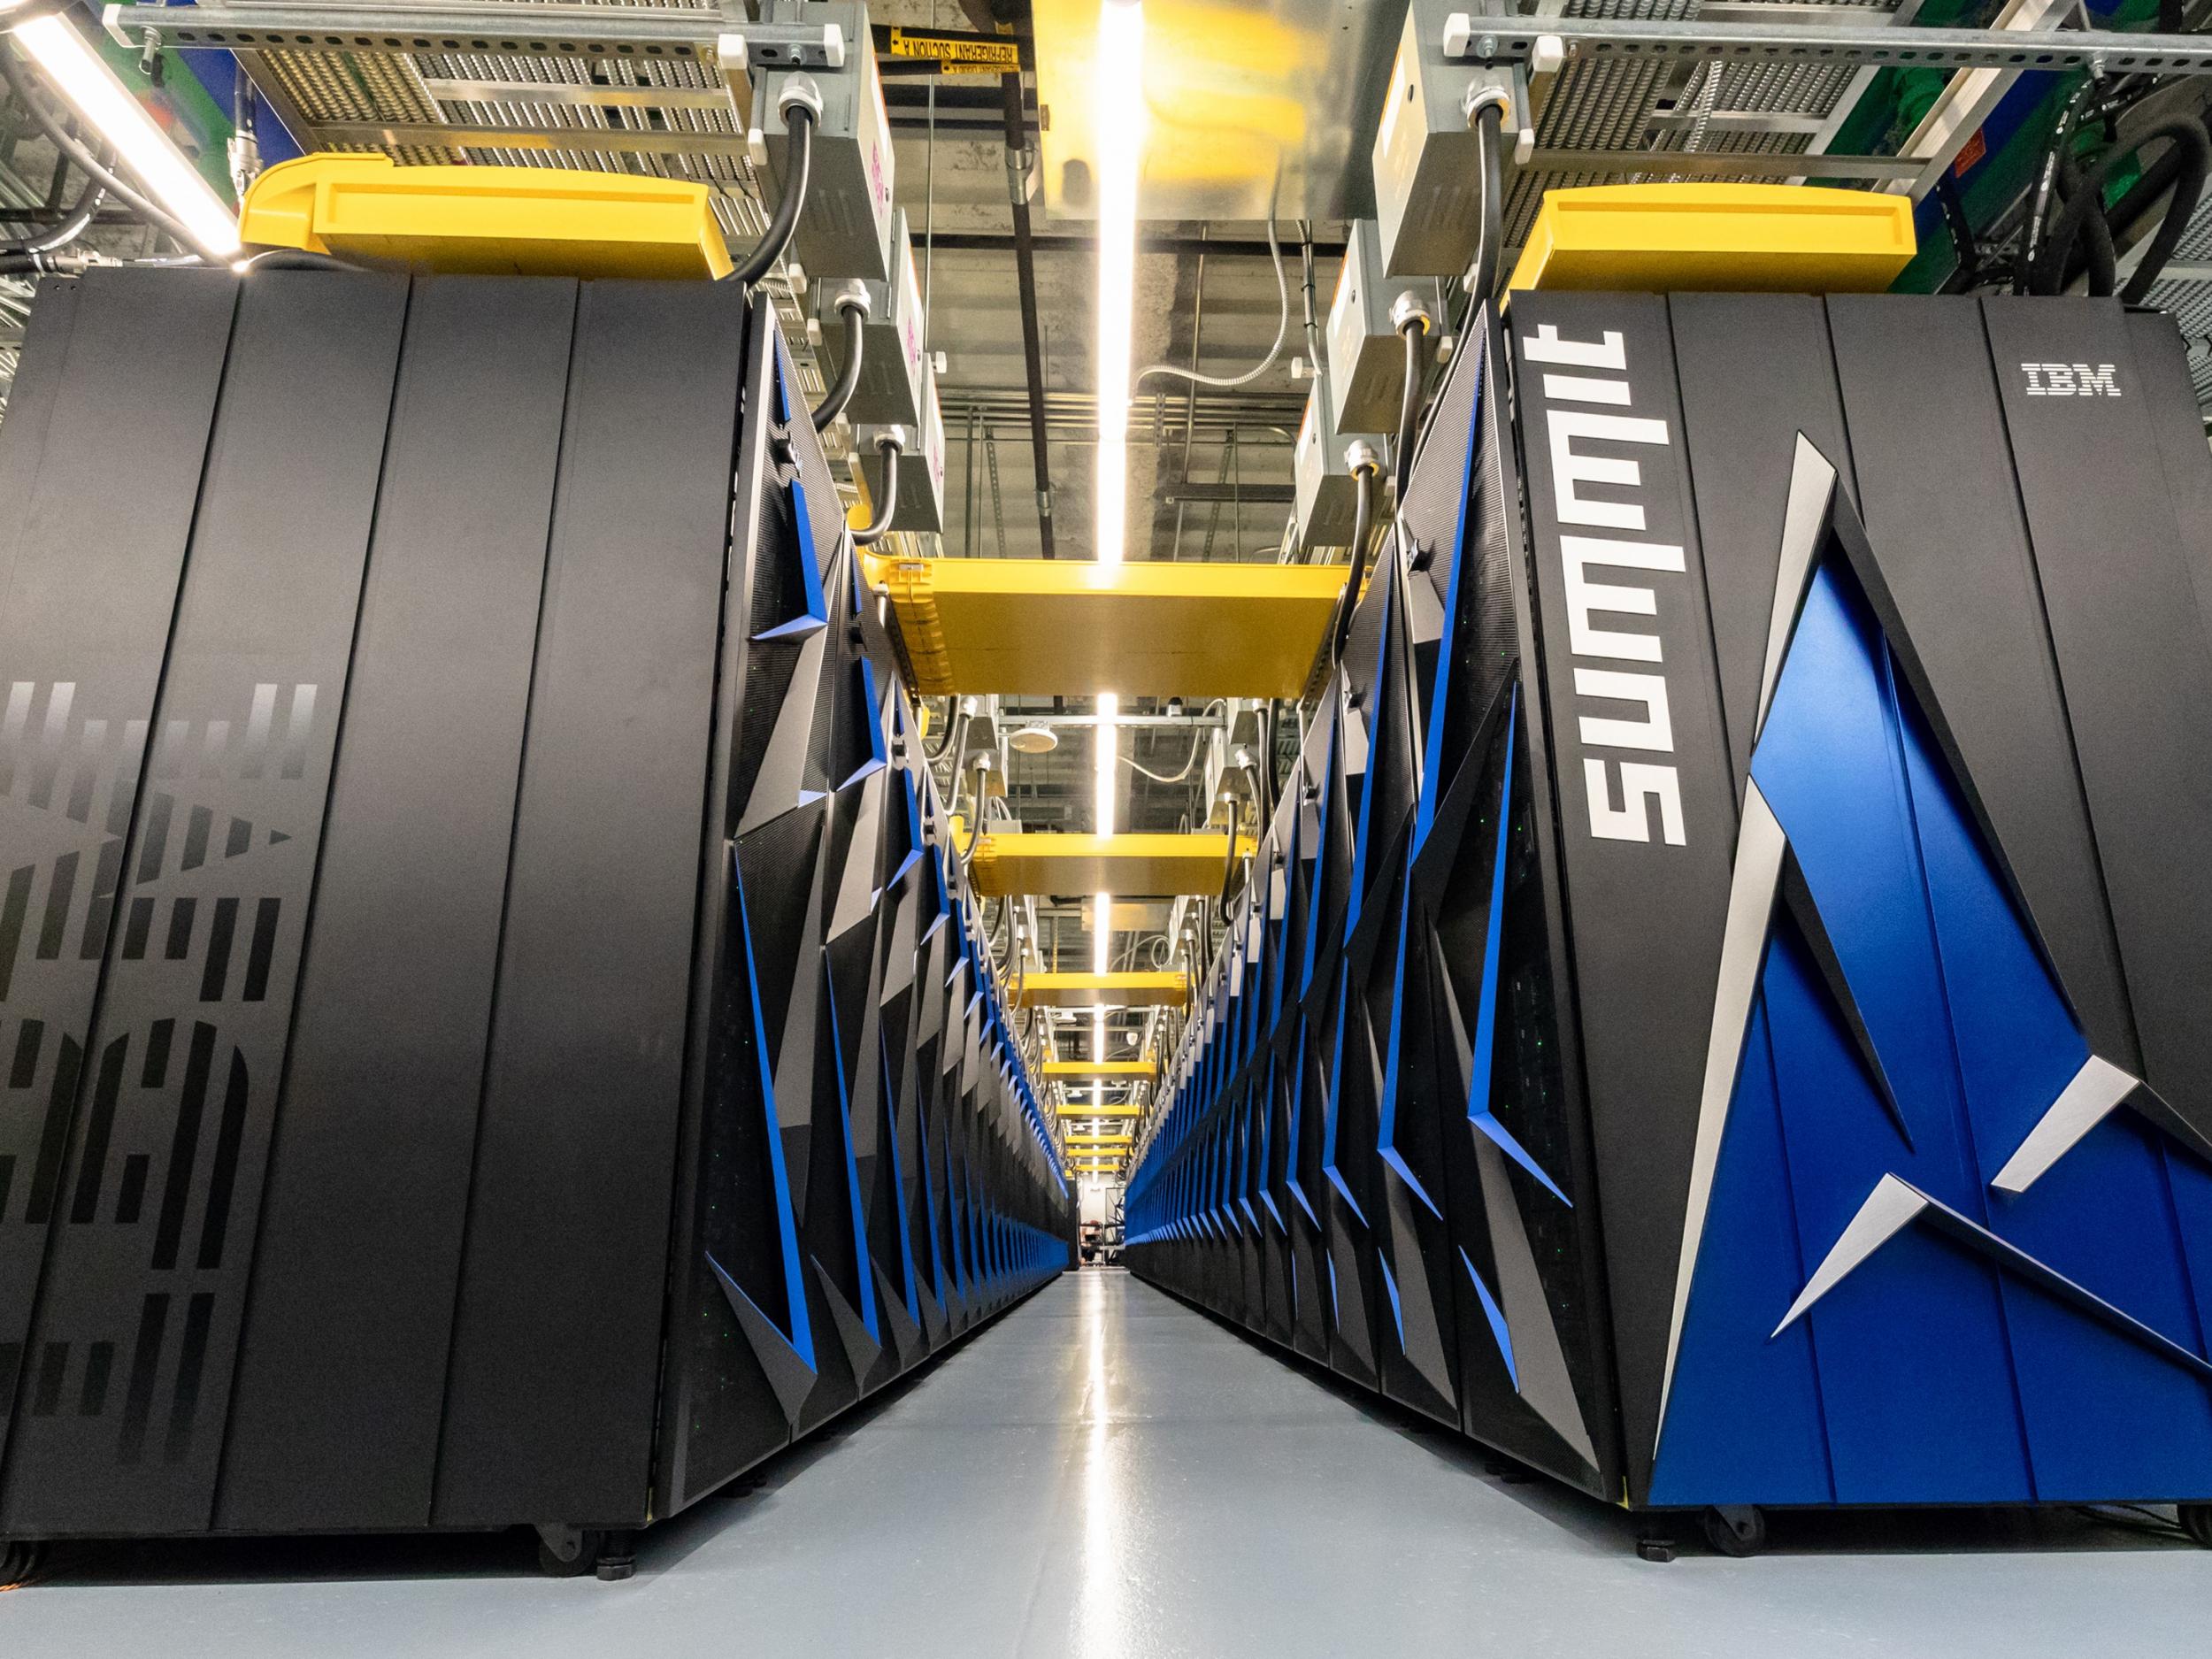 IBM Summit is the world's fastest supercomputer